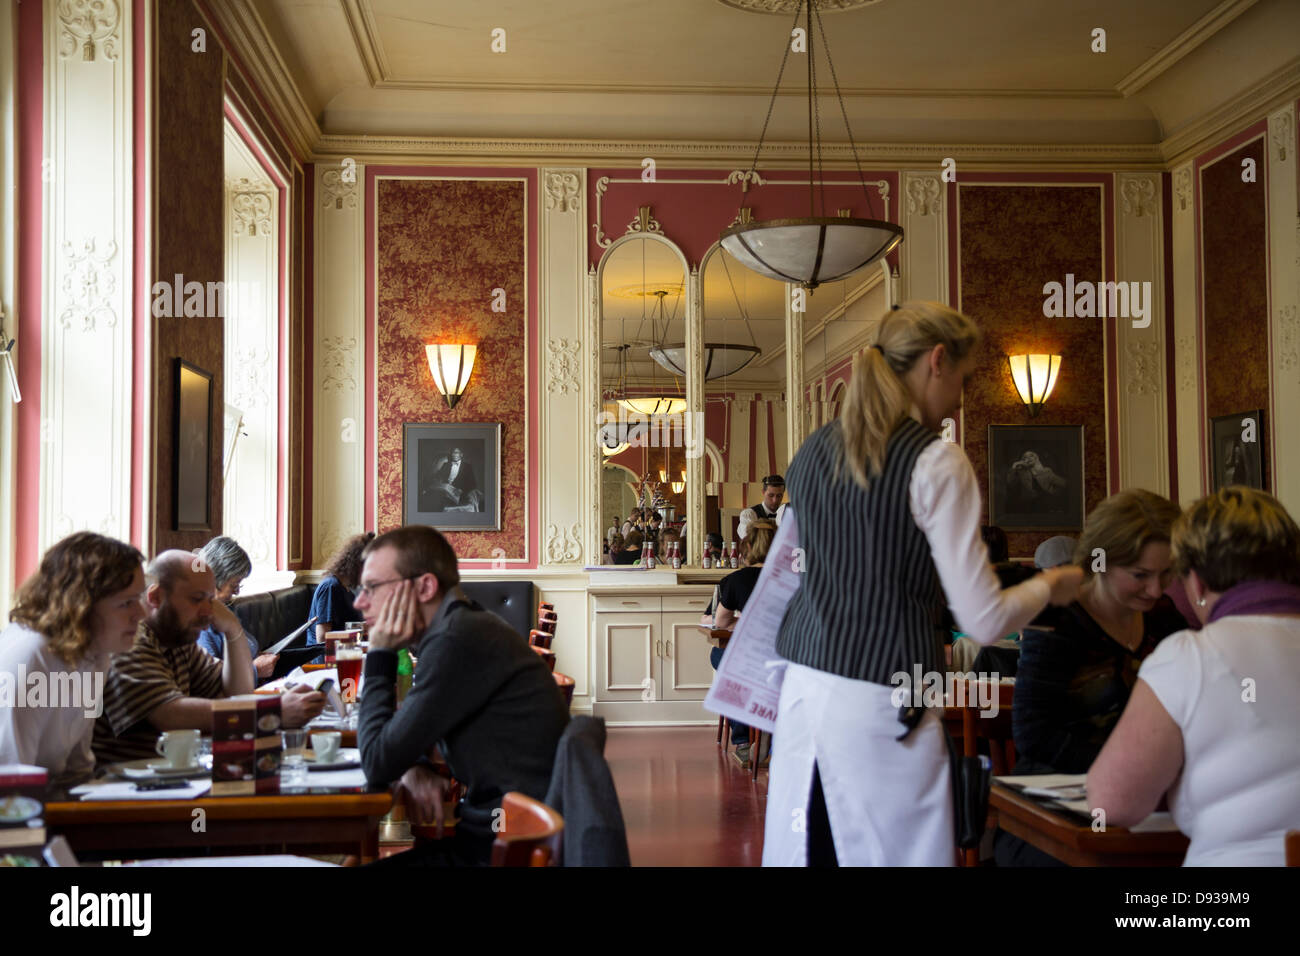 Guests in the famous Cafe Louvre where Kafka was a regular, Prague, Czech Republic Stock Photo